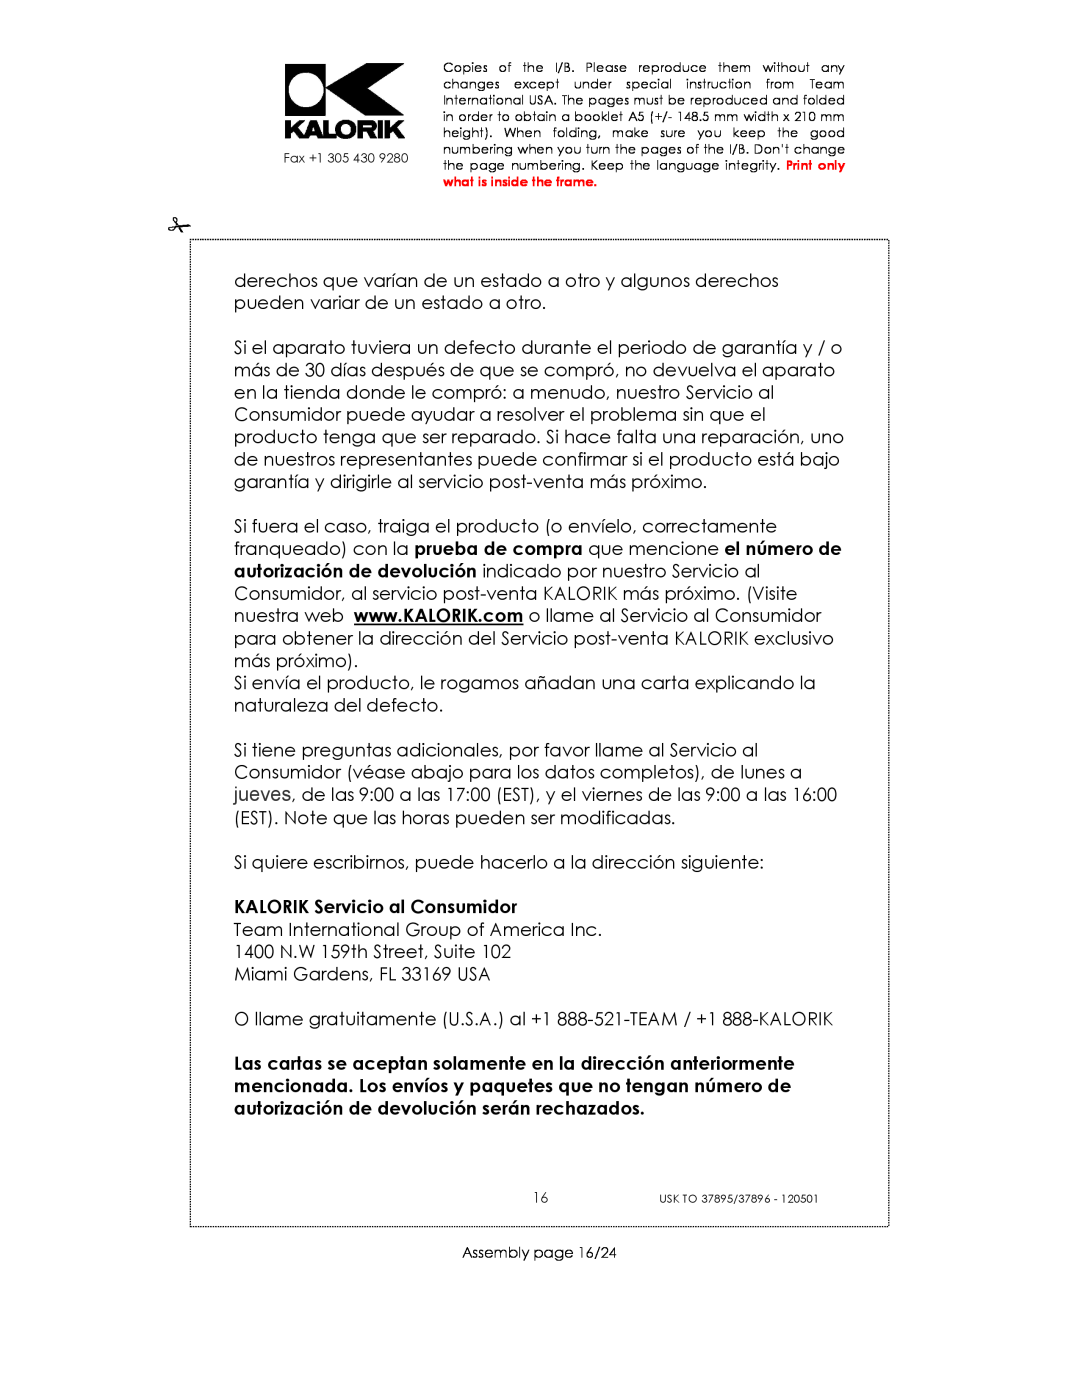 Kalorik USK TO 37896, USK TO 37895 manual KALORIK Servicio al Consumidor, Assembly page 16/24 